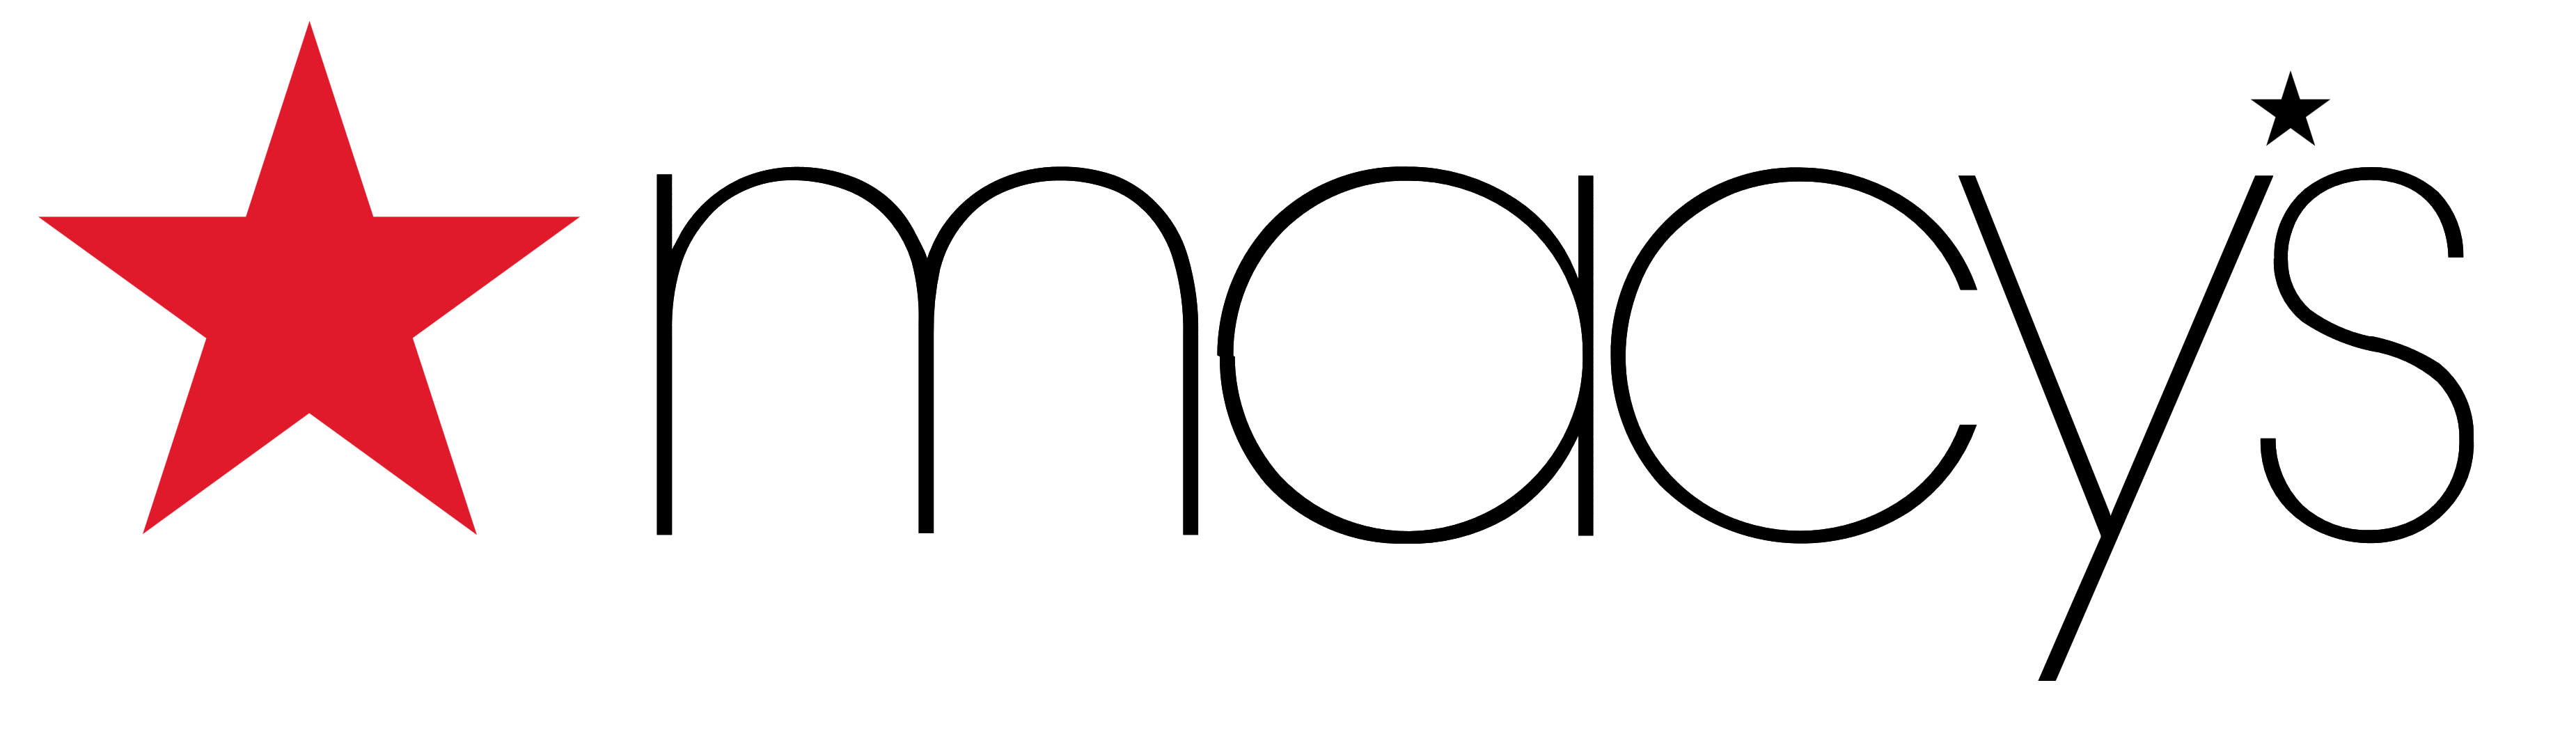 Macy's logo, logotype